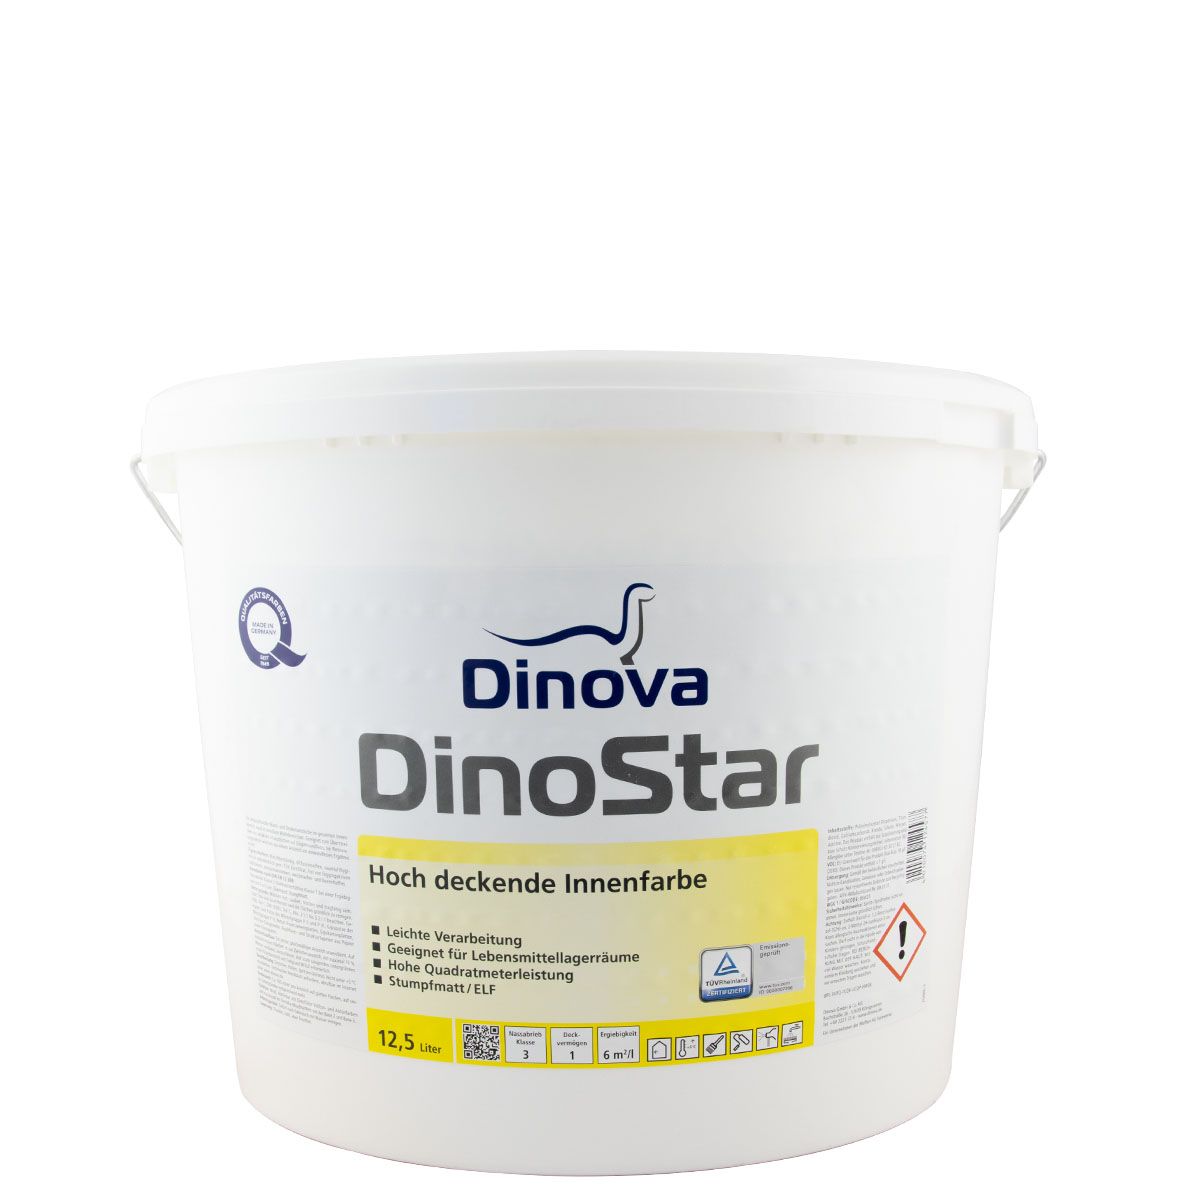 Dinova Dinostar 12,5L Innenfarbe Kaufland.de